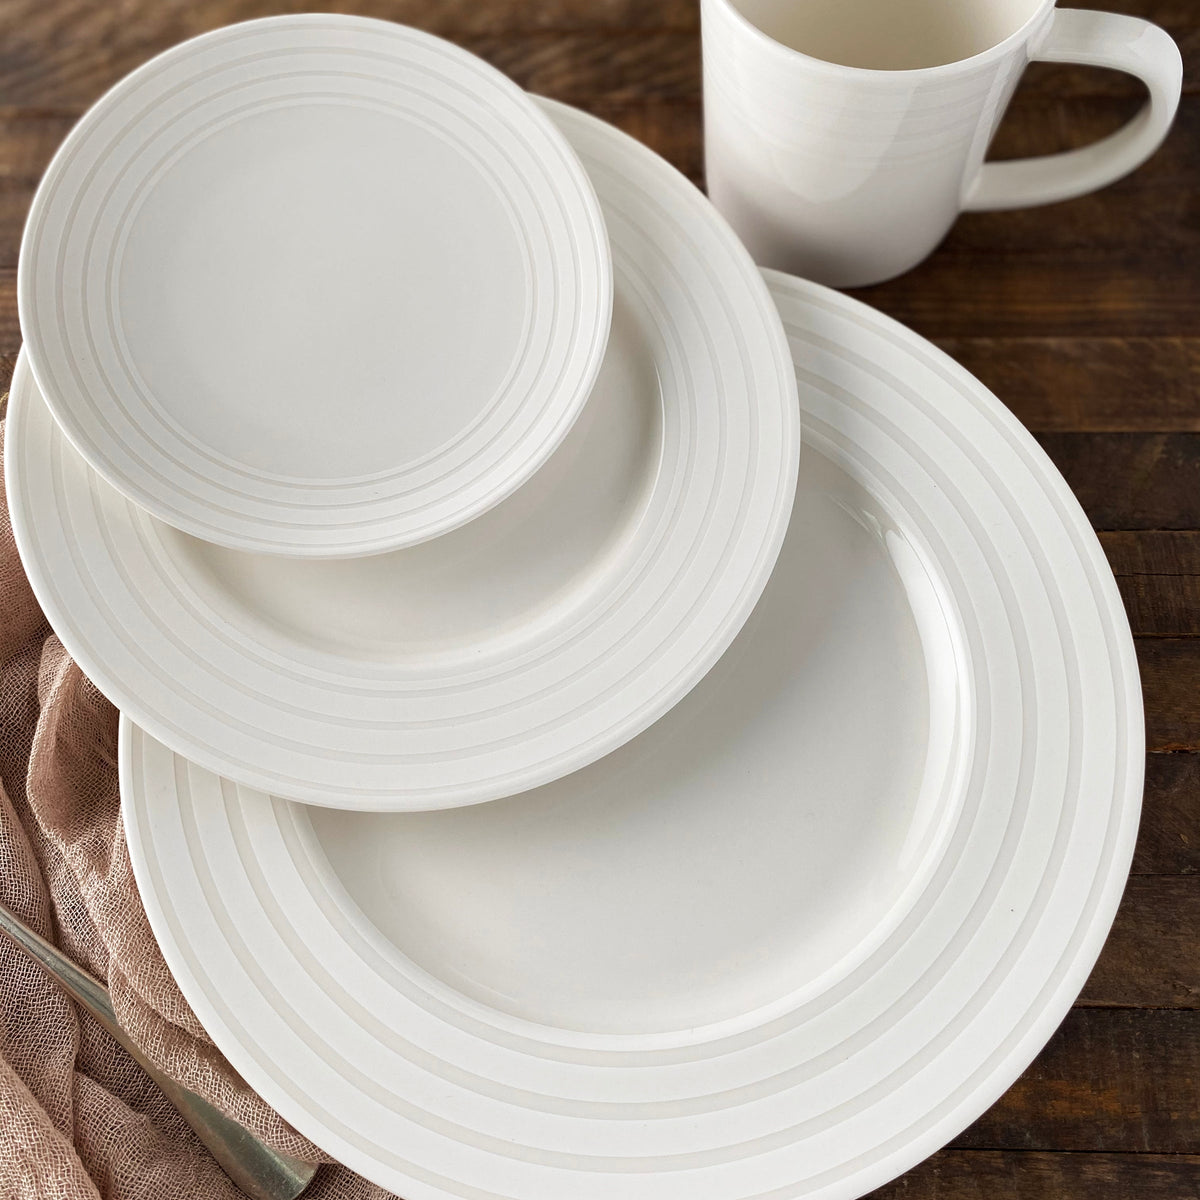 A collection of Caskata Artisanal Home Cambridge Stripe Canapé Plates on a wooden table, including little plates.